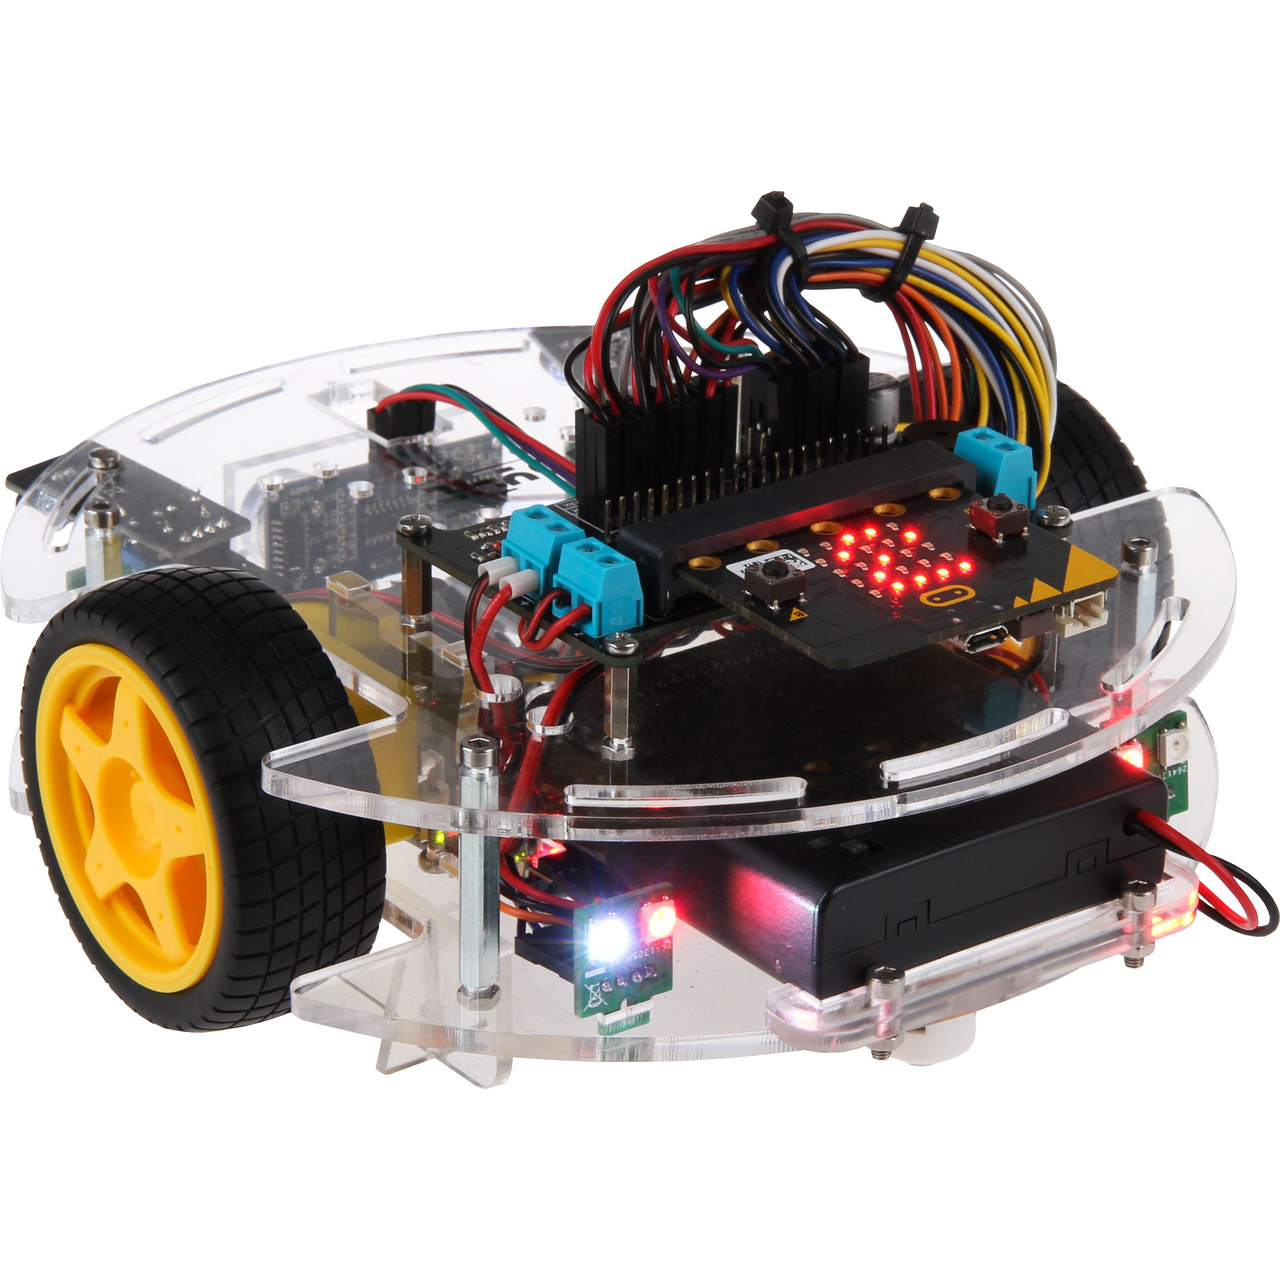 Joy-IT Bausatz programmierbares Roboterauto Joy-Car inkl- Einplatinencomputer micro:bit v2